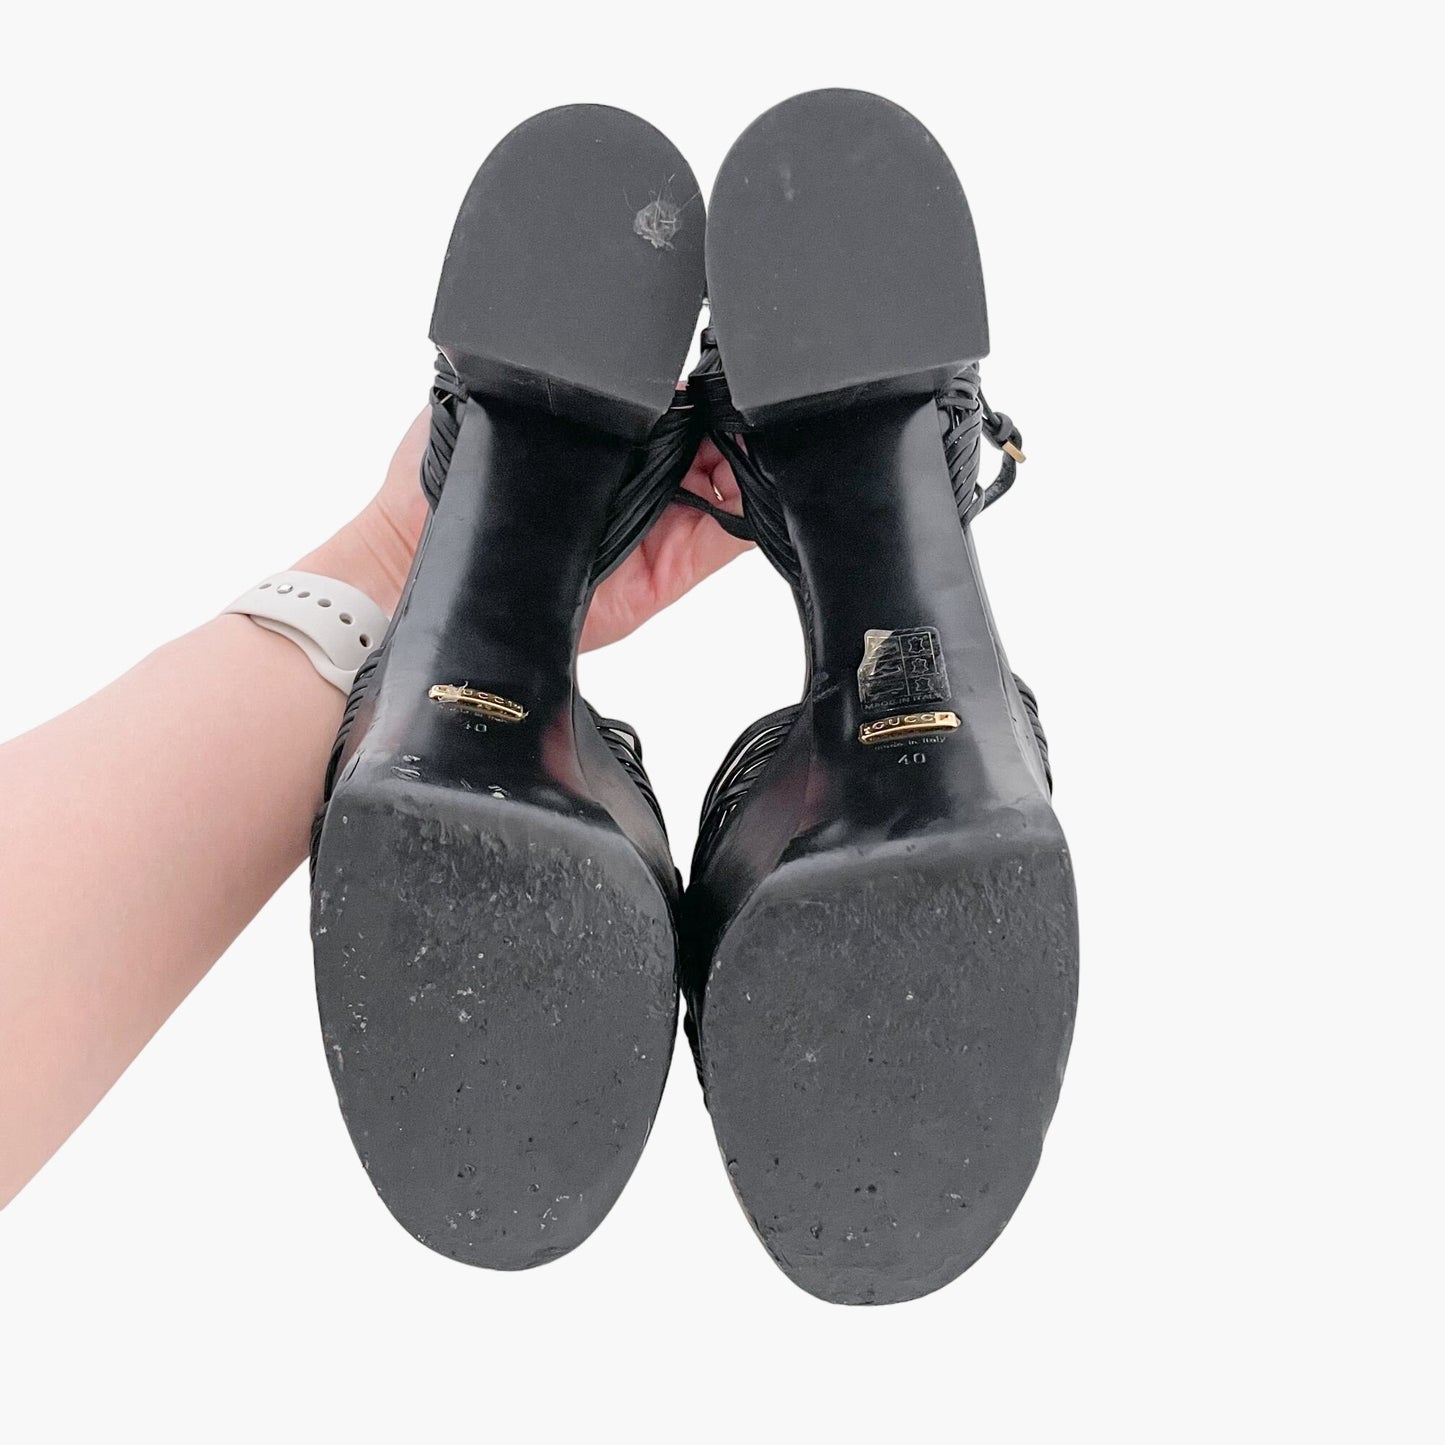 Gucci Crawford Platform Sandals in Black Leather Size 40